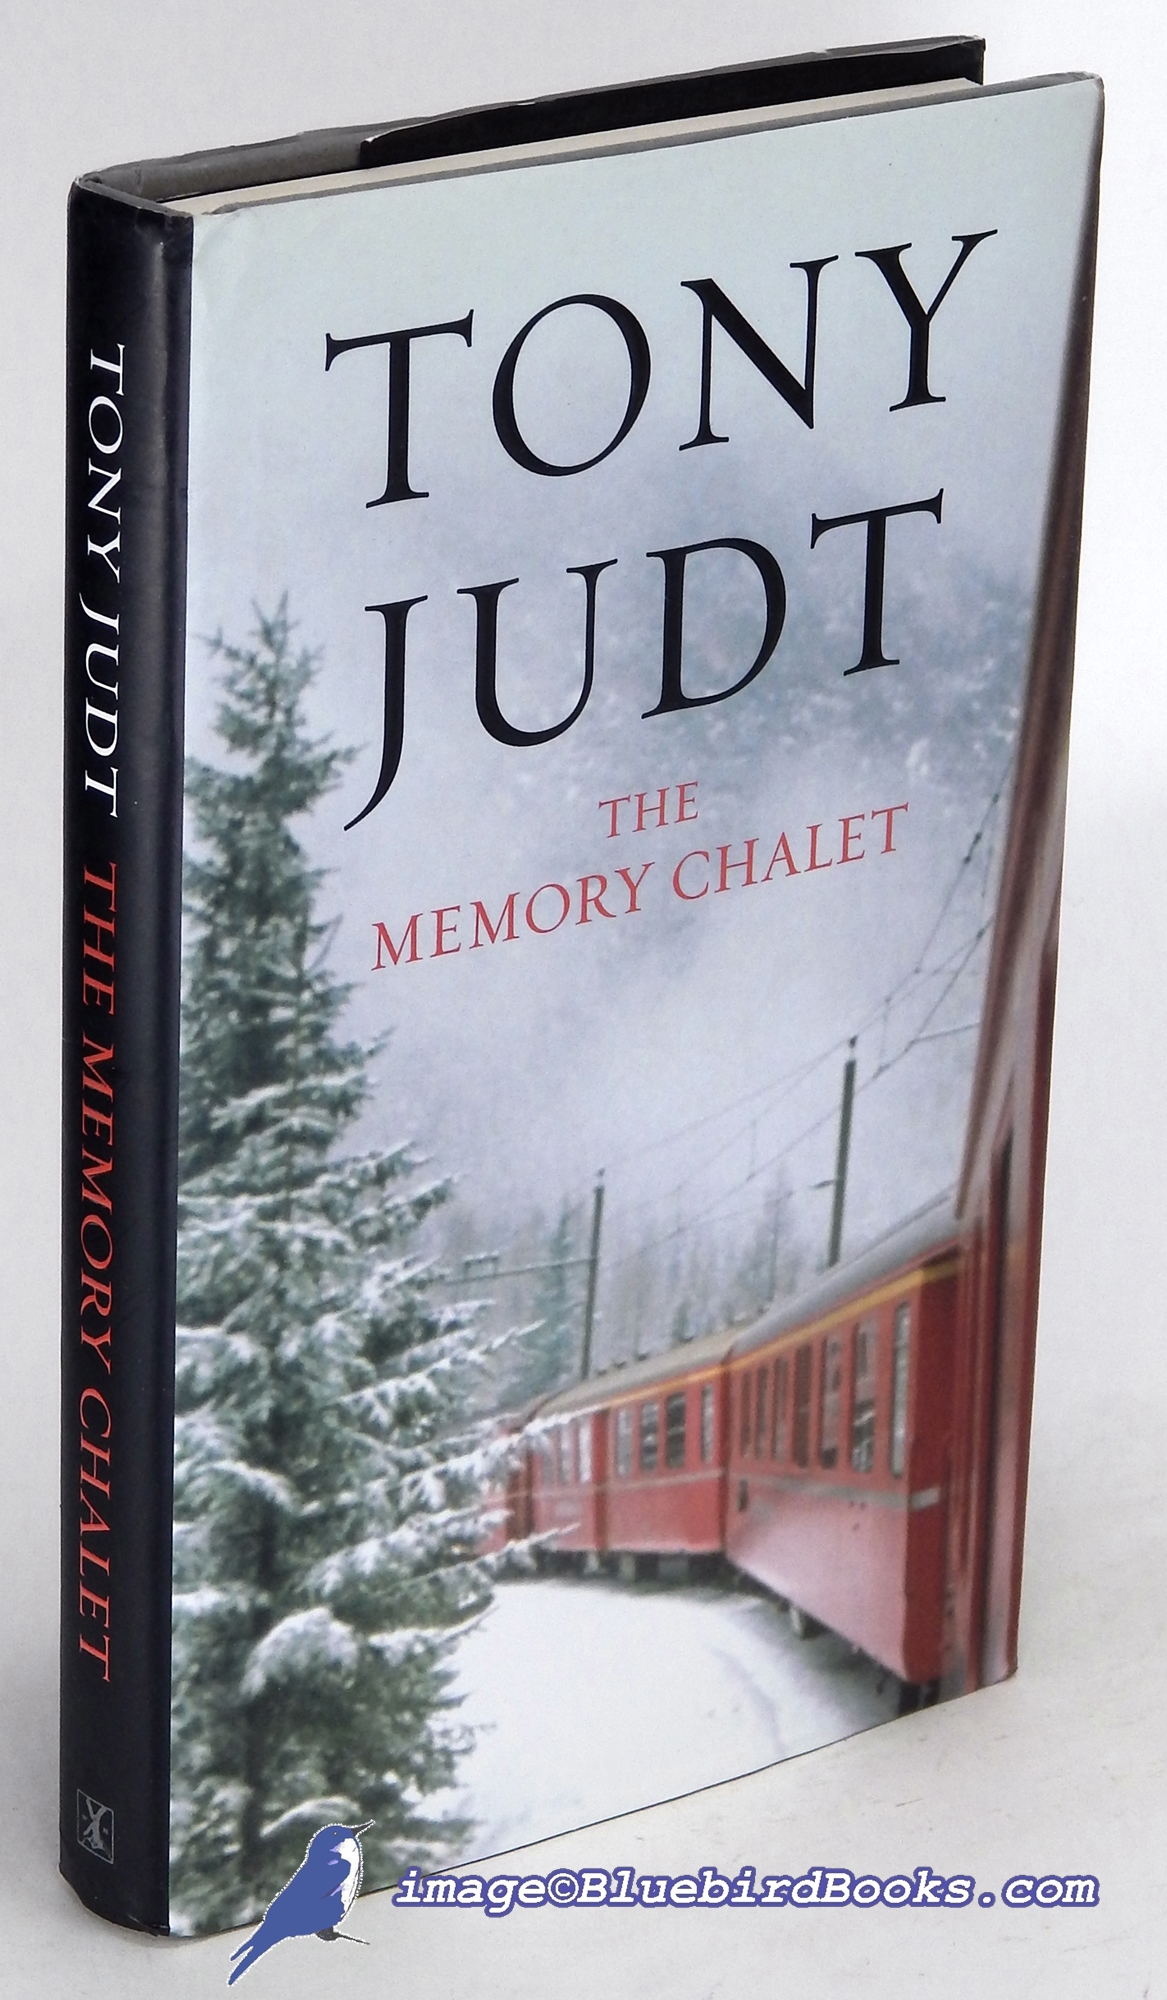 JUDT, TONY - The Memory Chalet